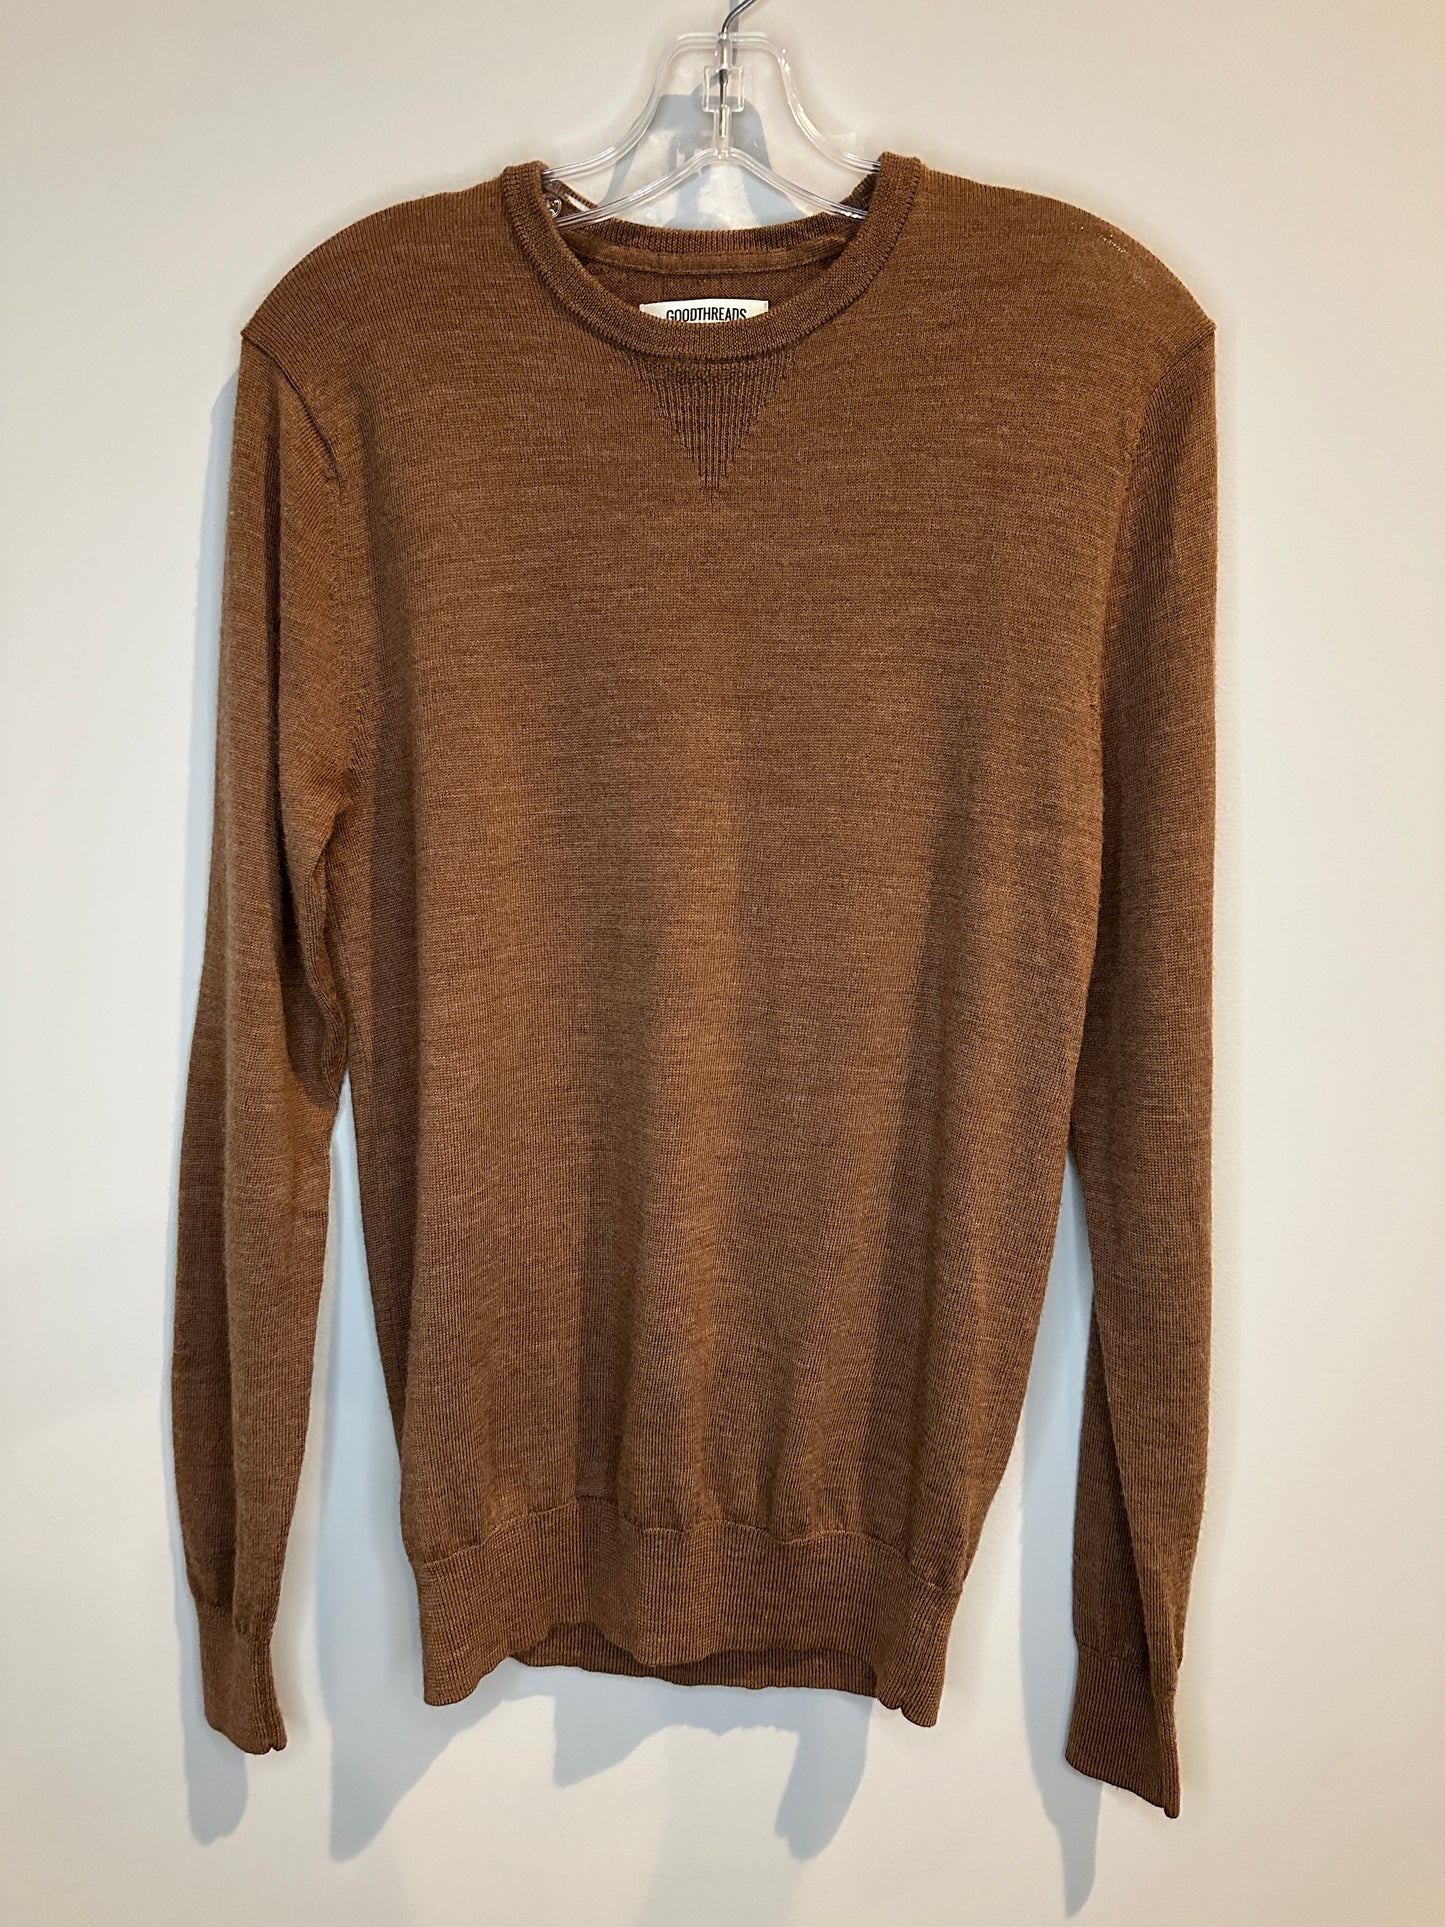 Goodthreads Men's Size XS Light Brown Crew Neck Merino Wool Sweater